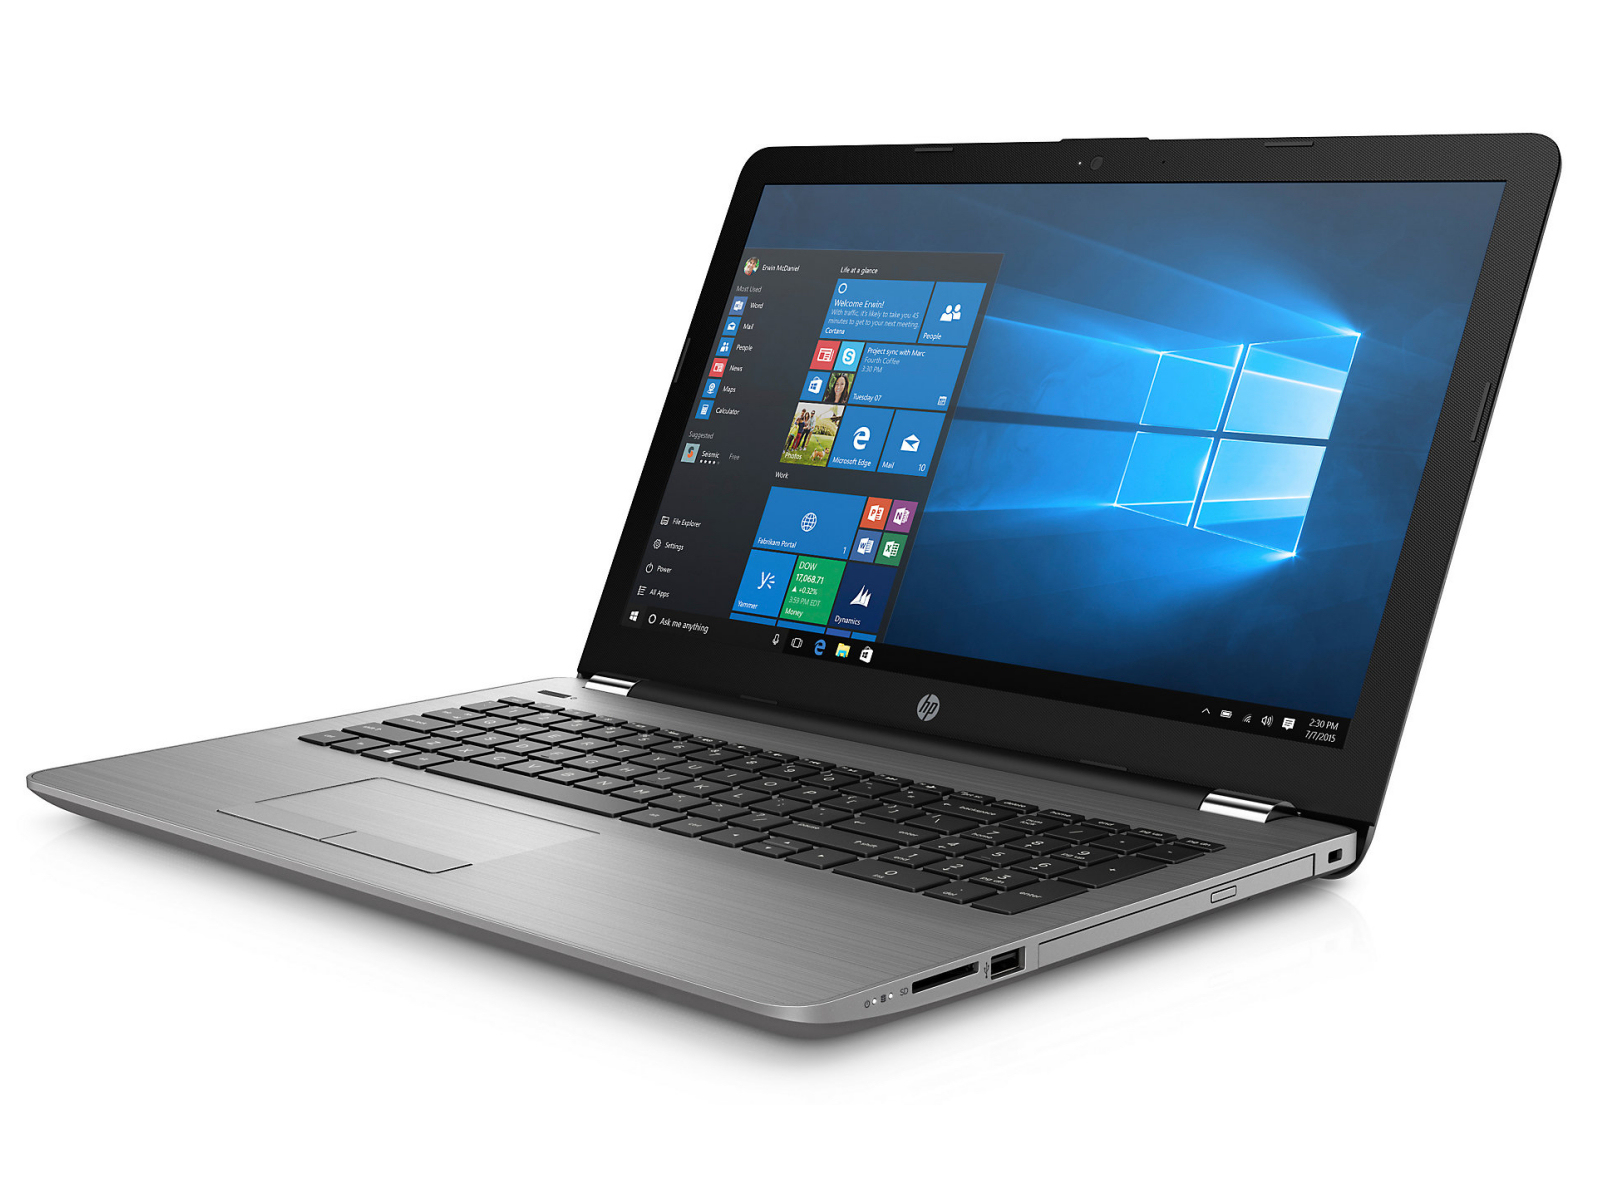 HP 250 G6 (i3-6006U, SSD, FHD) Laptop Review - NotebookCheck.net ...